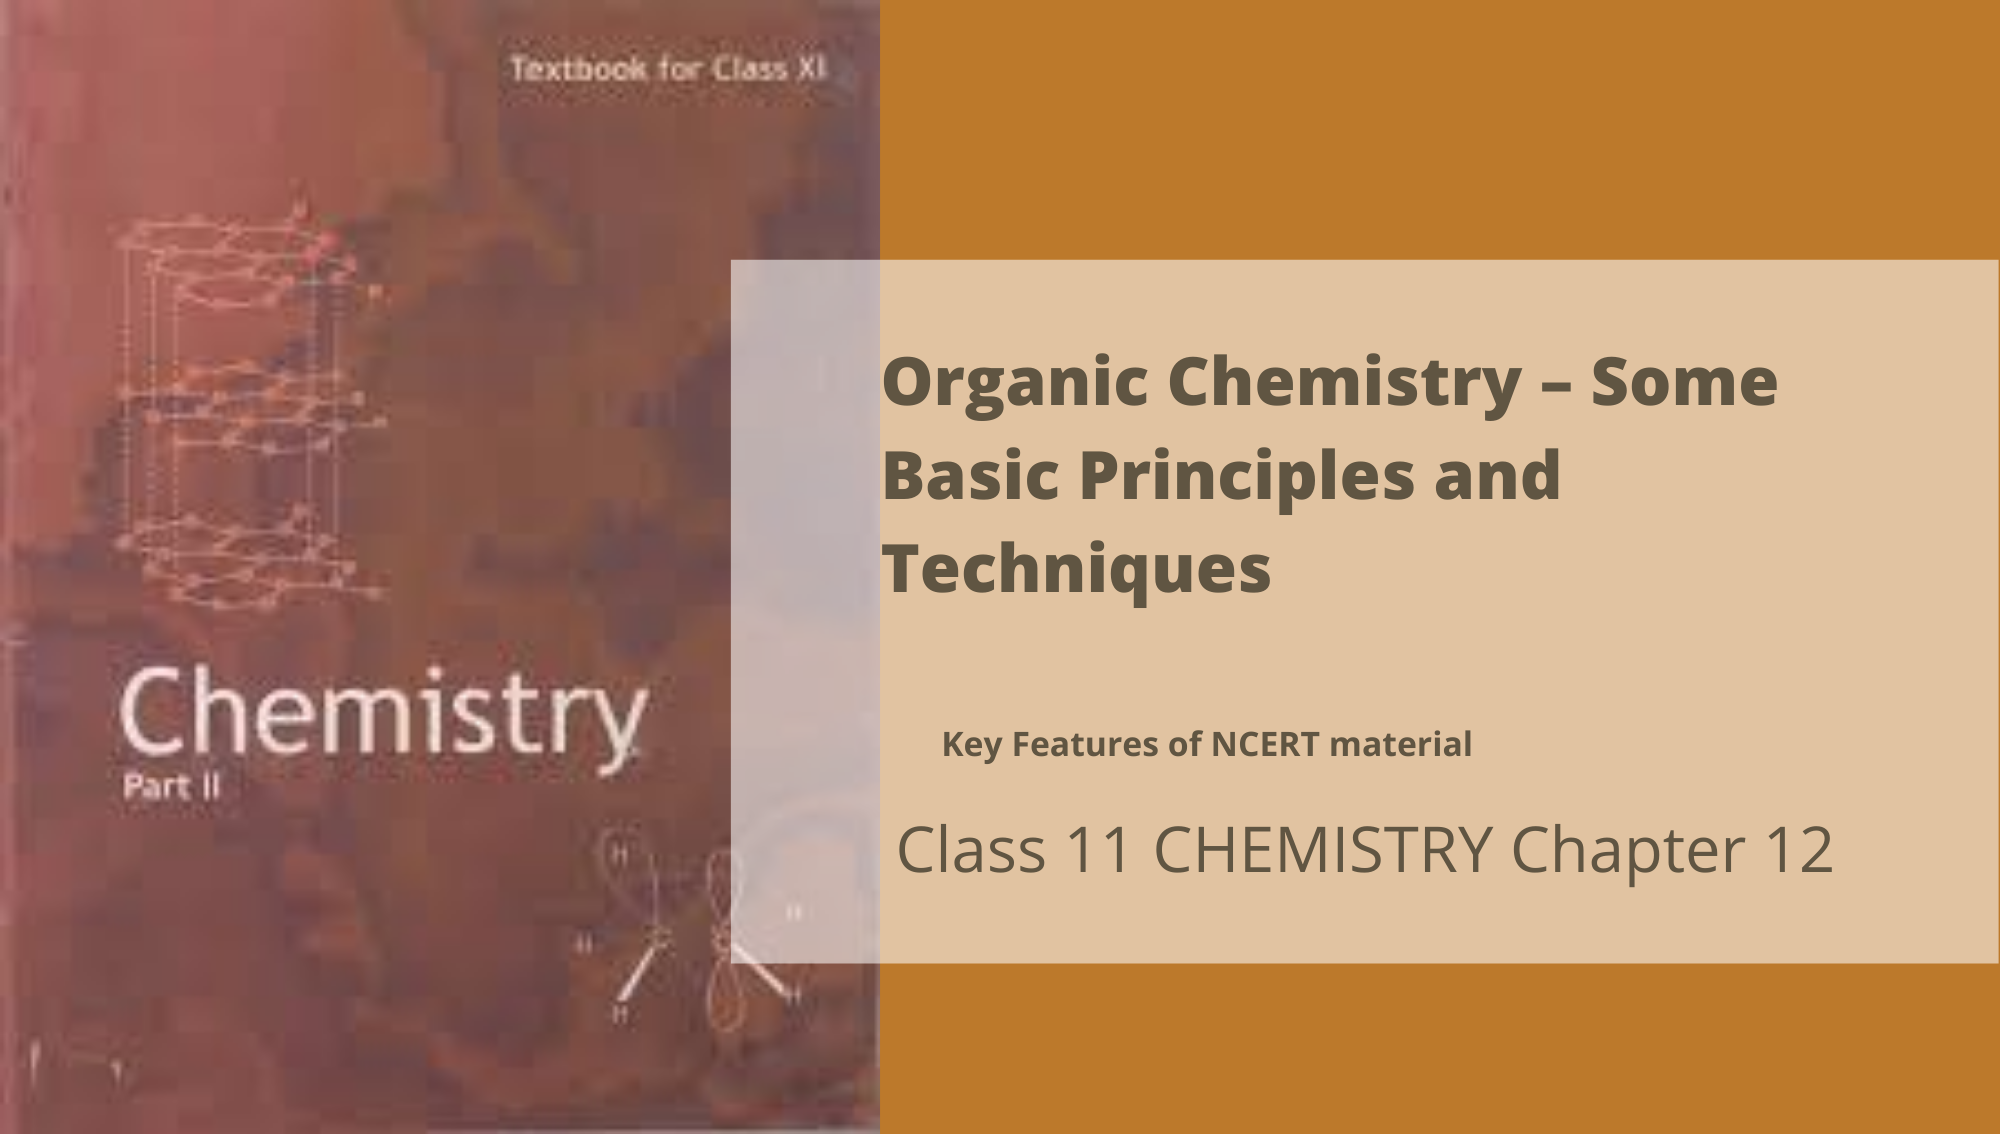 case study of organic chemistry class 11